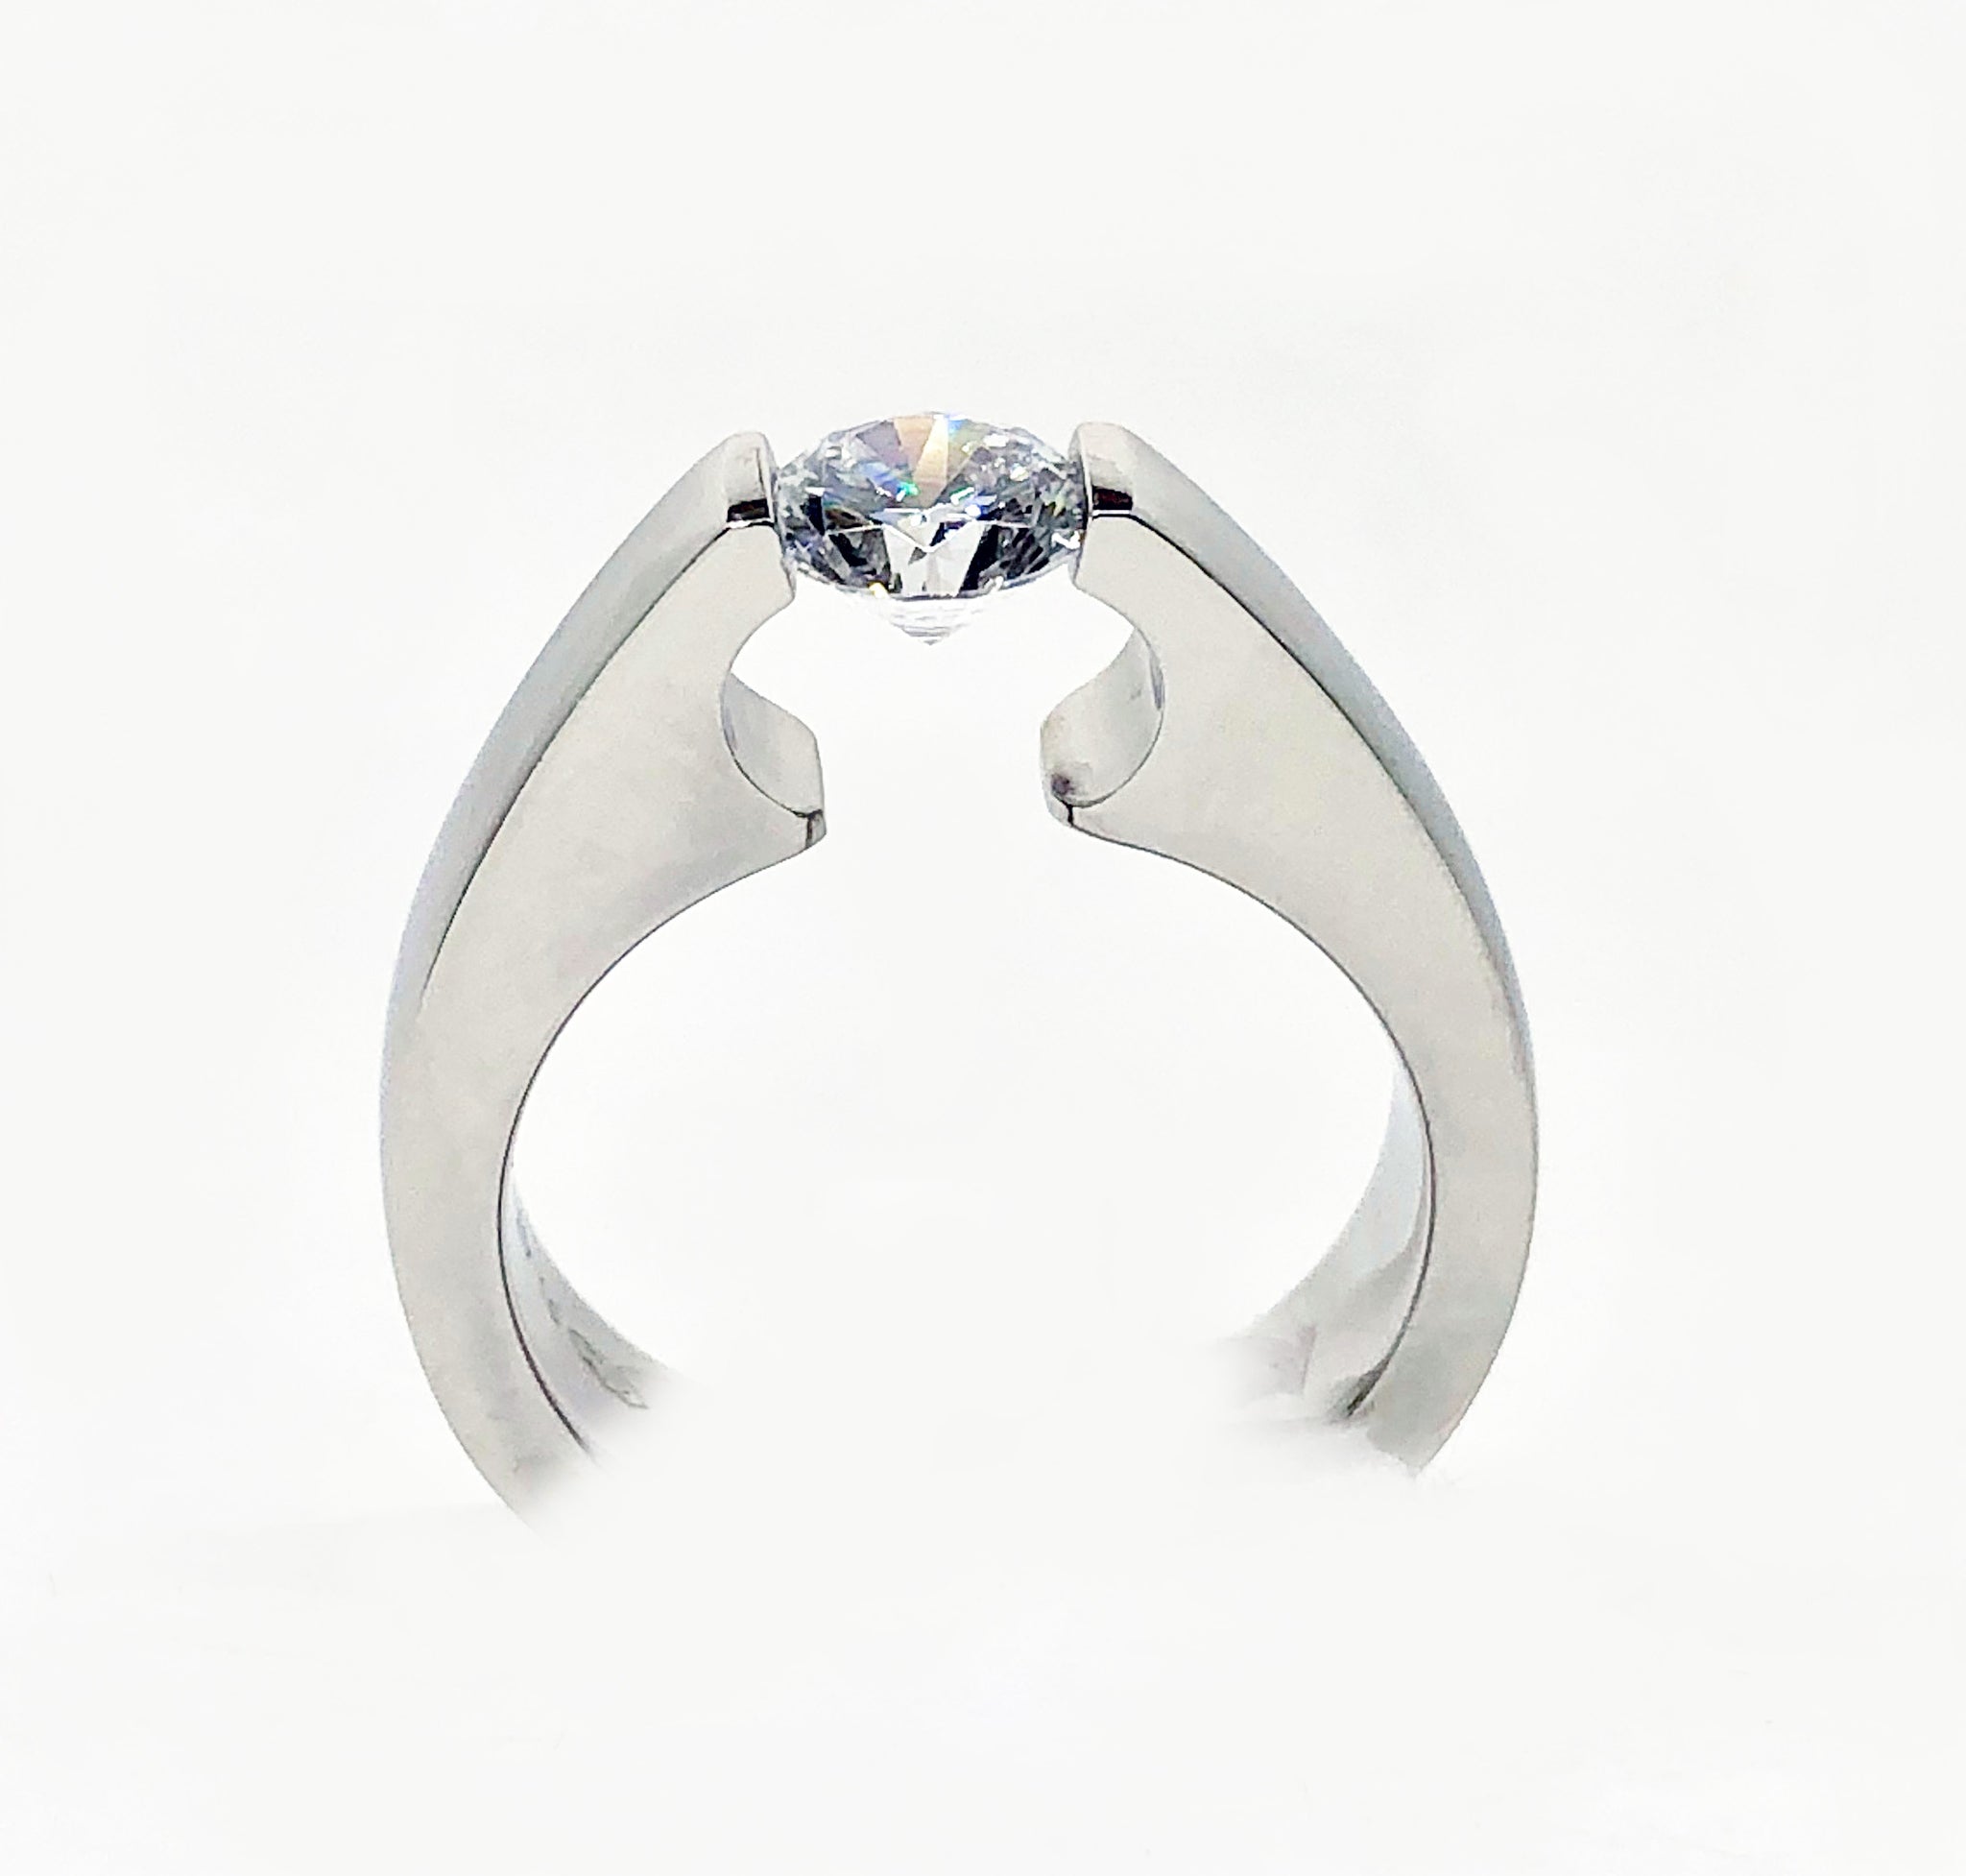 14K White Gold Tension Set Engagement Ring 1 Carat G-VS2 Ideal Cut Round  Diamond (Size 3.5) | Amazon.com